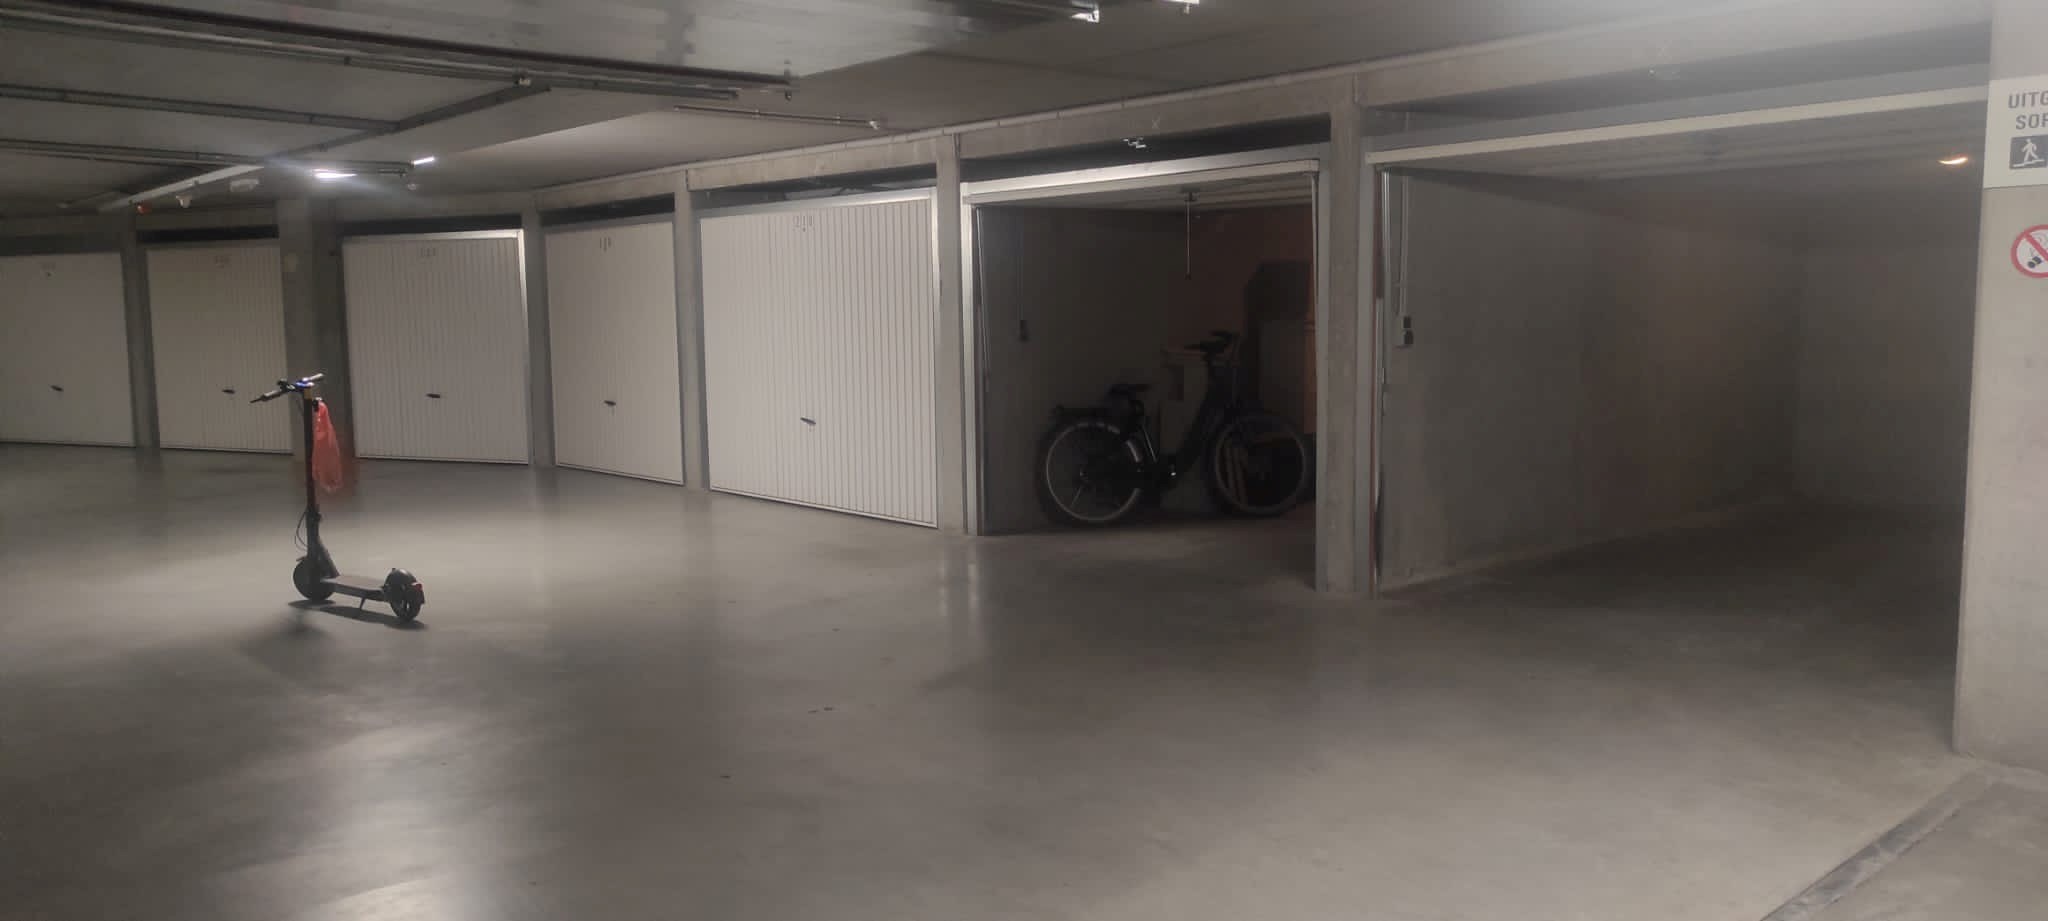 Sir Anthony - Zoutelaan: gesloten garagebox op niveau -3. 